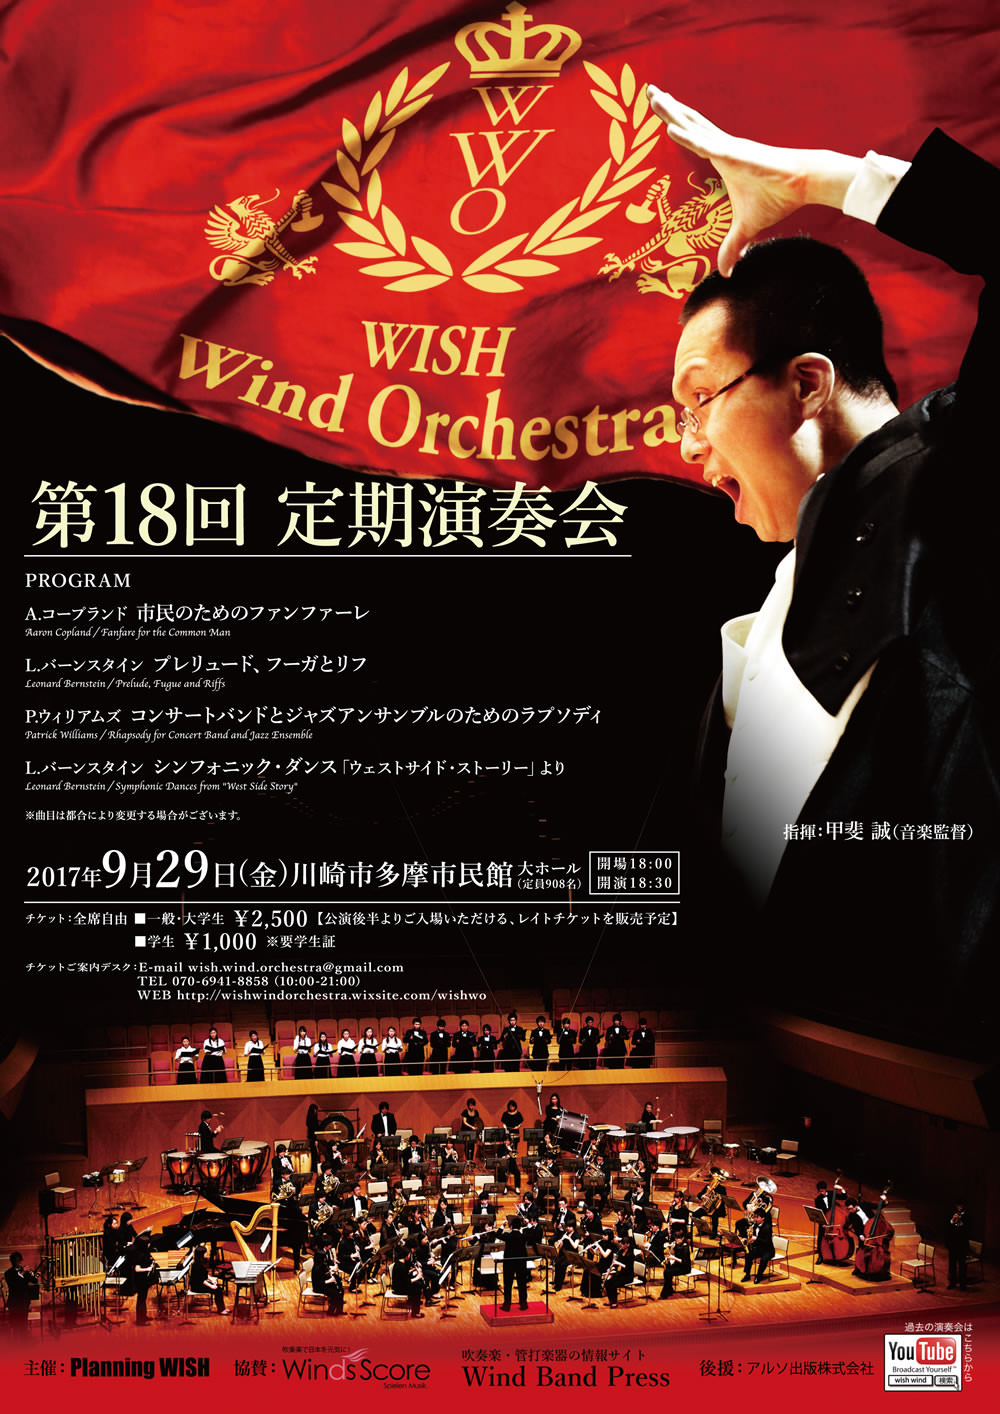 PR】「こんなアツいプログラム、WISH Windならではですよ！」 インタビュー：指揮者 甲斐誠さん～WISH Wind  Orchestra第18回定期演奏会に向けて～ - 吹奏楽・管楽器・打楽器・クラシック音楽のWebメディア Wind Band Press